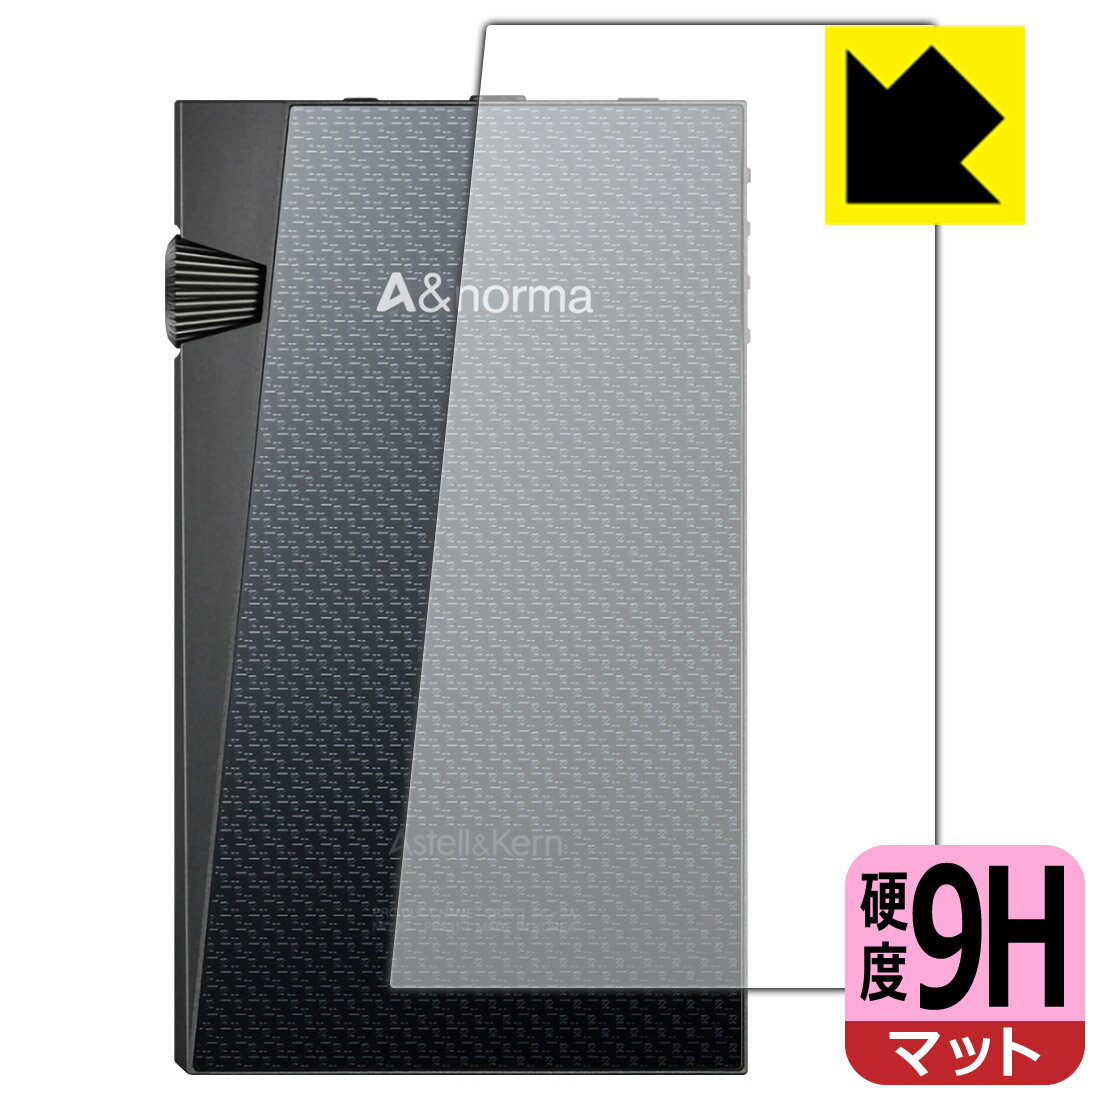 9H高硬度【反射低減】保護フィルム Astell&Kern A&norma SR35 (背面用) 日本製 自社製造直販